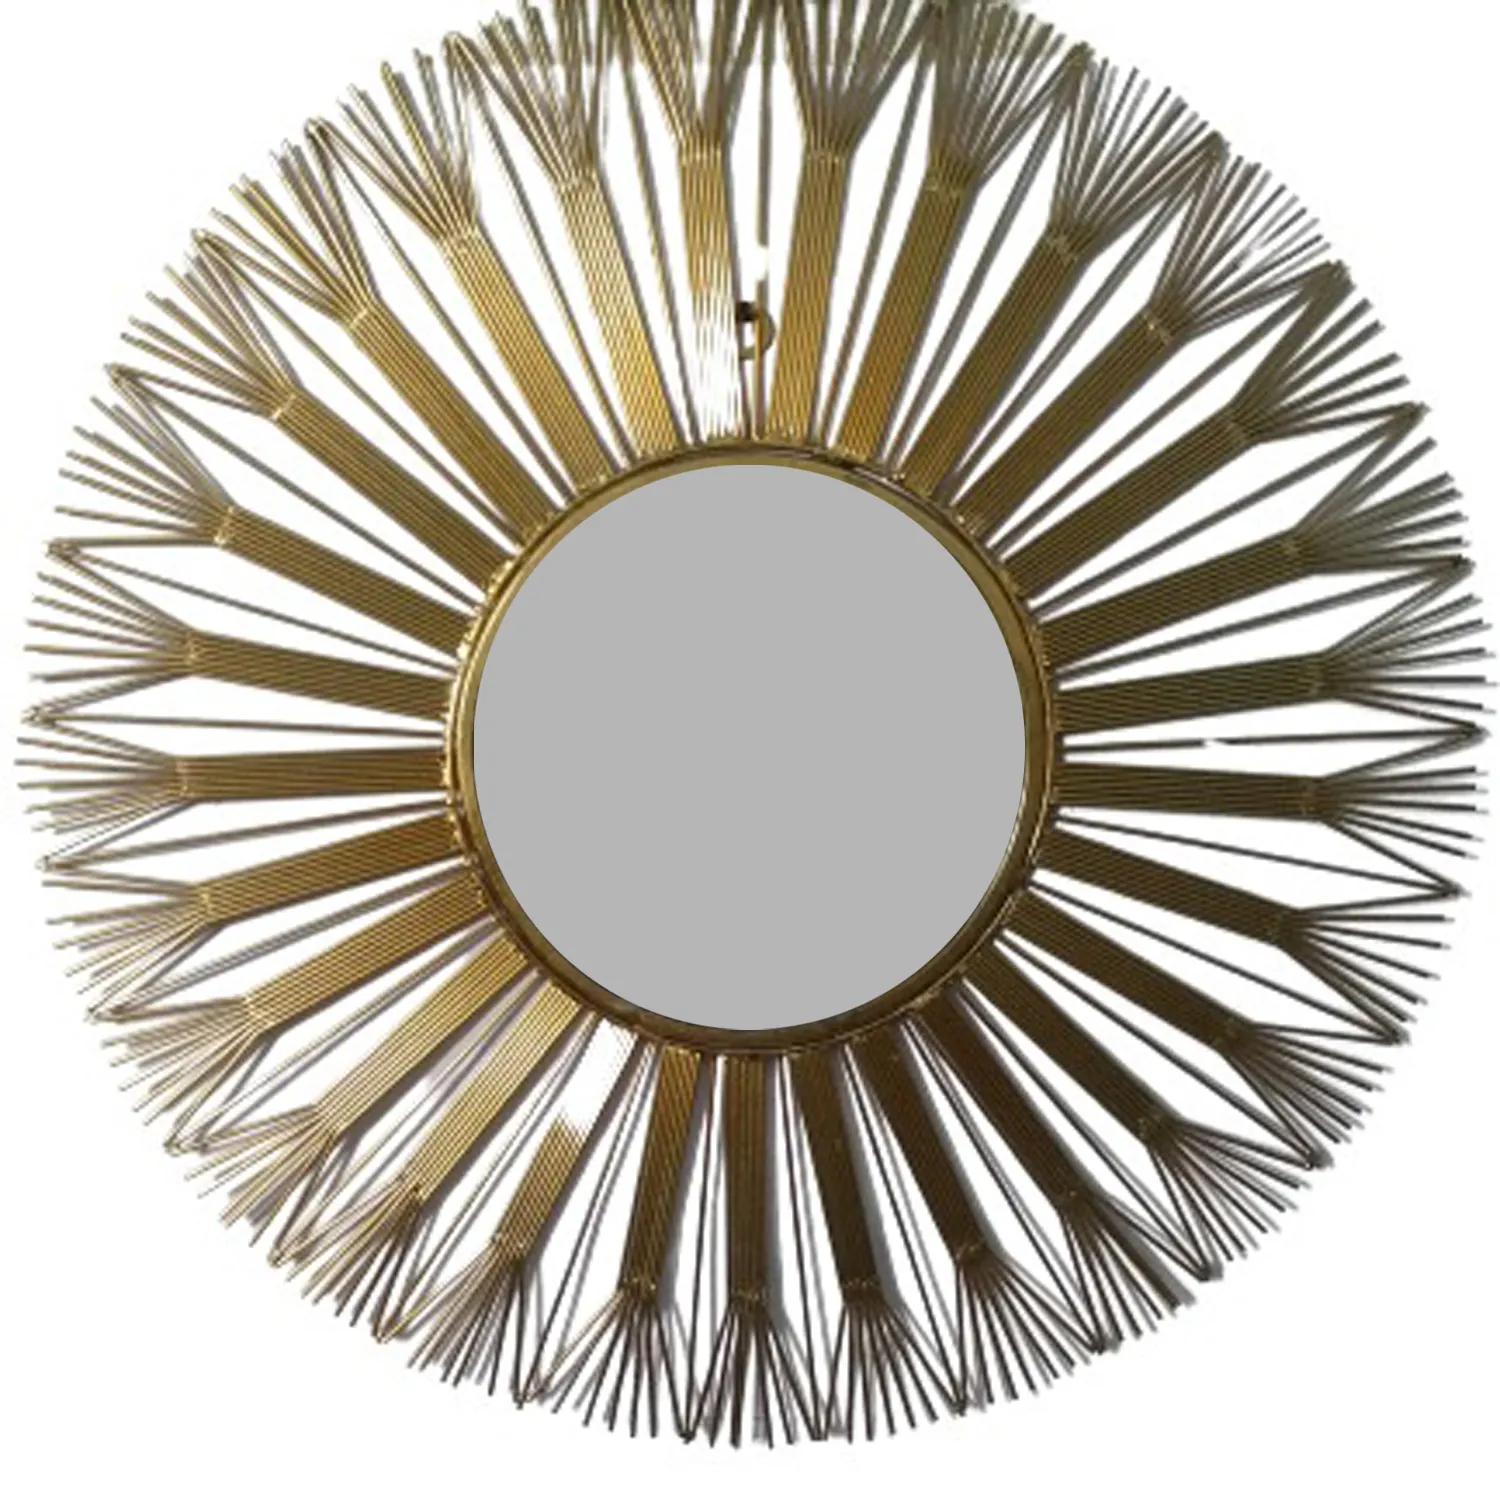 Decorative Sunburst Mirror Flower Shaped Metal Wall Decor Wall Mounted Hanging Metal, Round Leaf Design Modern Art Mirror